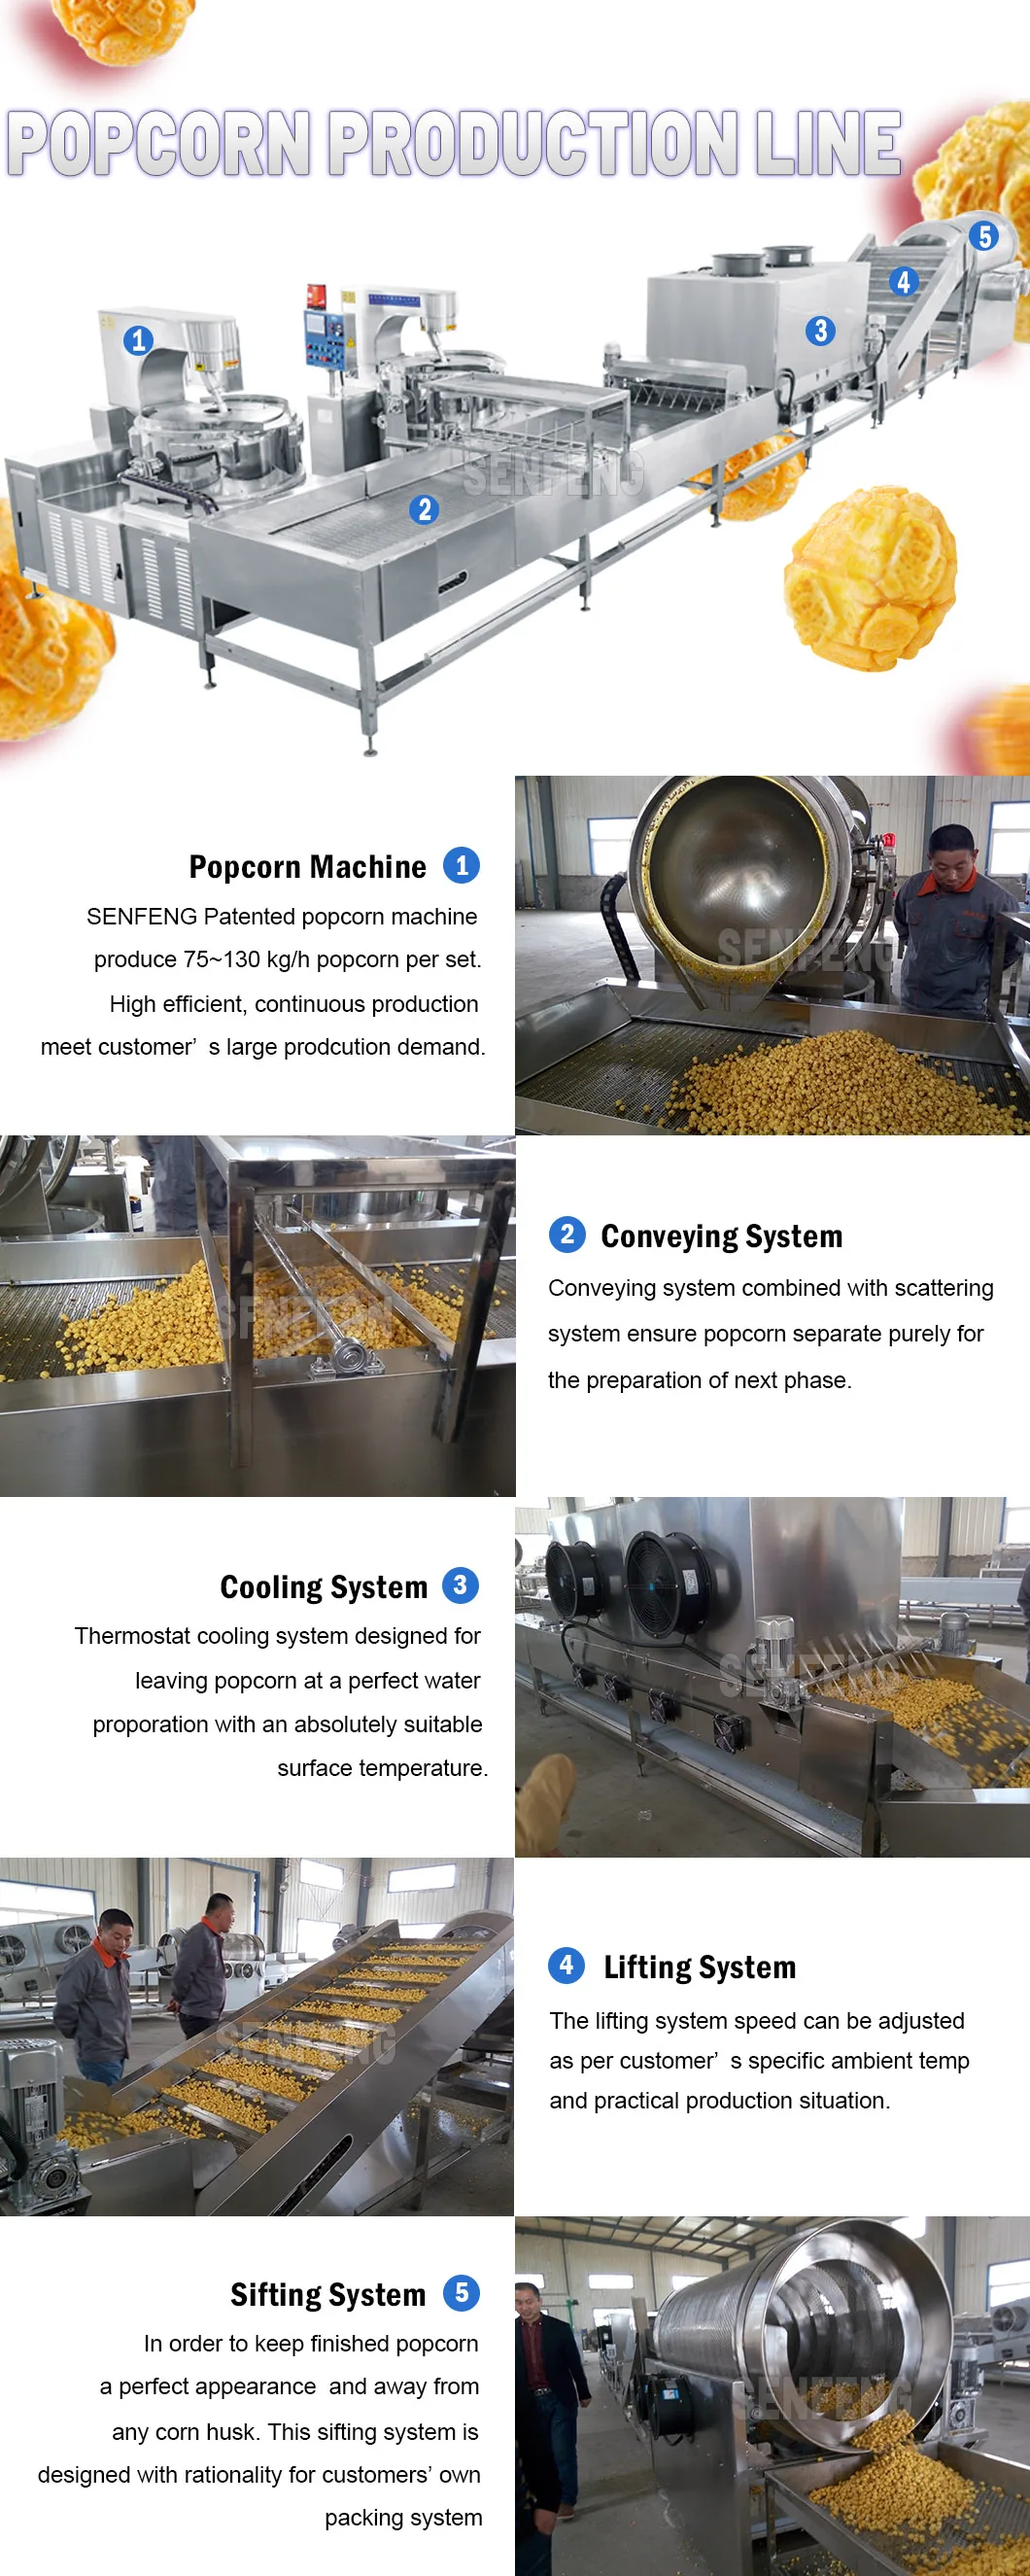 popcorn production line .jpg